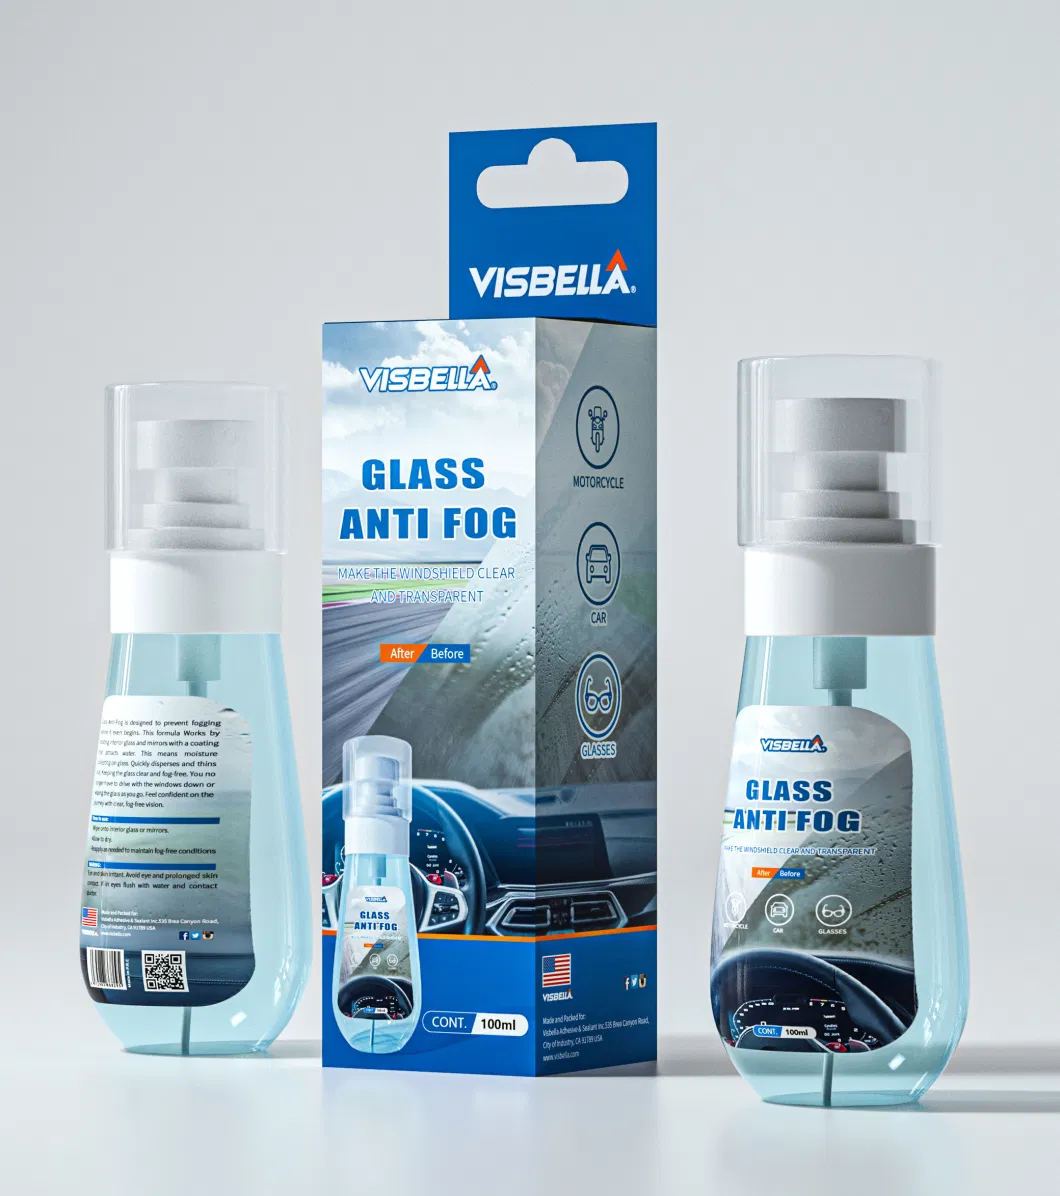 Visbella Glass Anti Fog